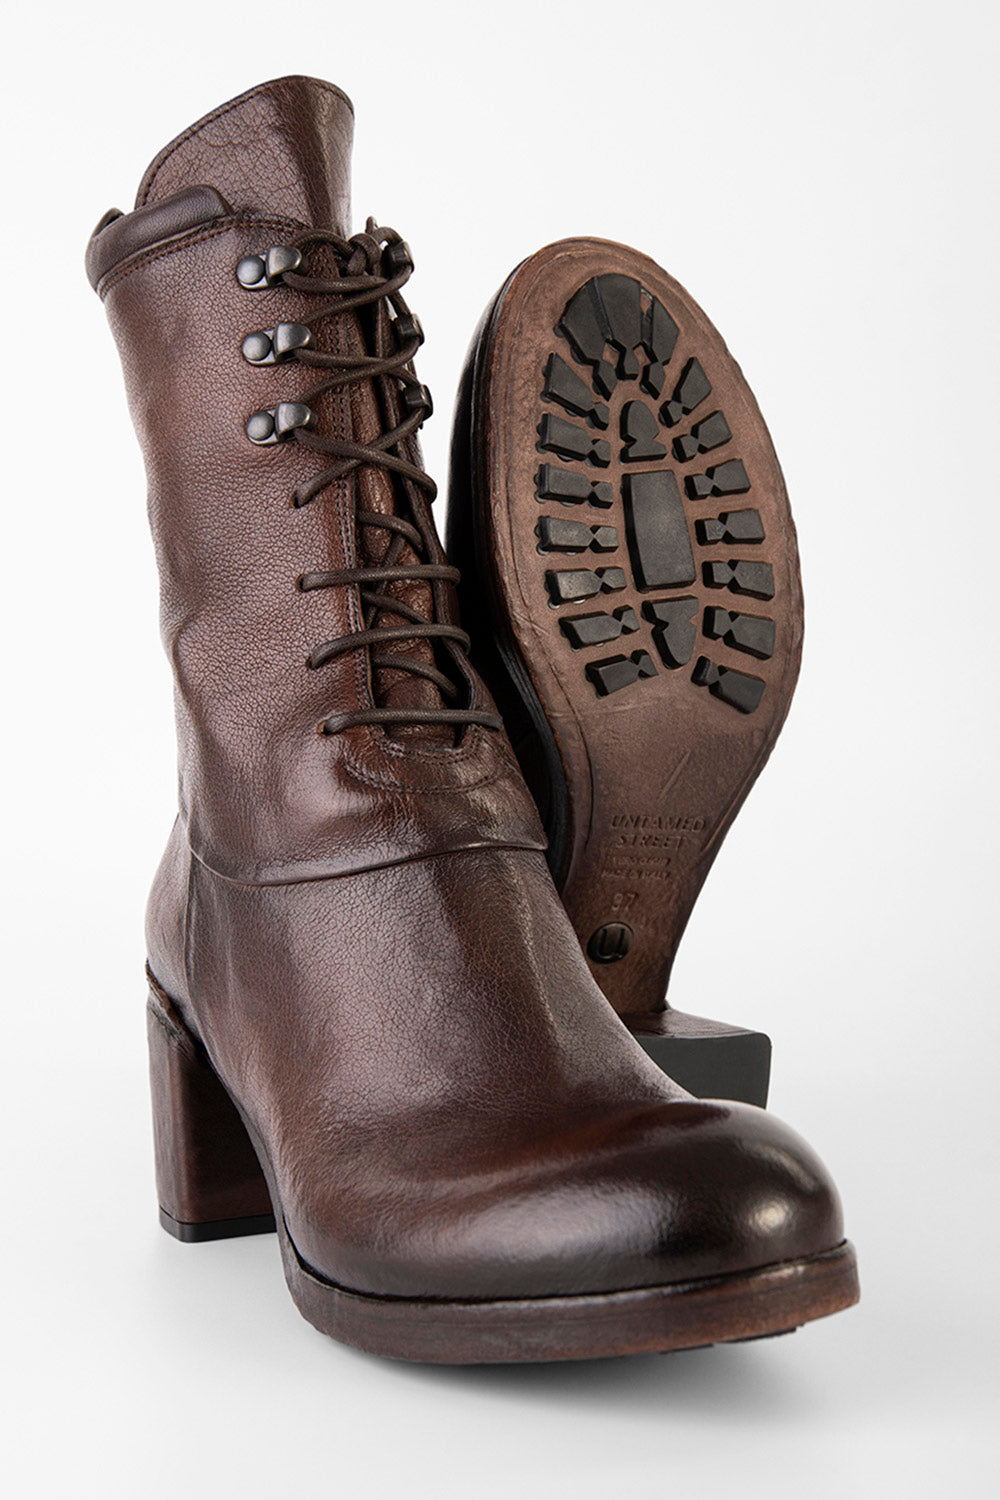 MADISON chocolate-brown high commando boots.